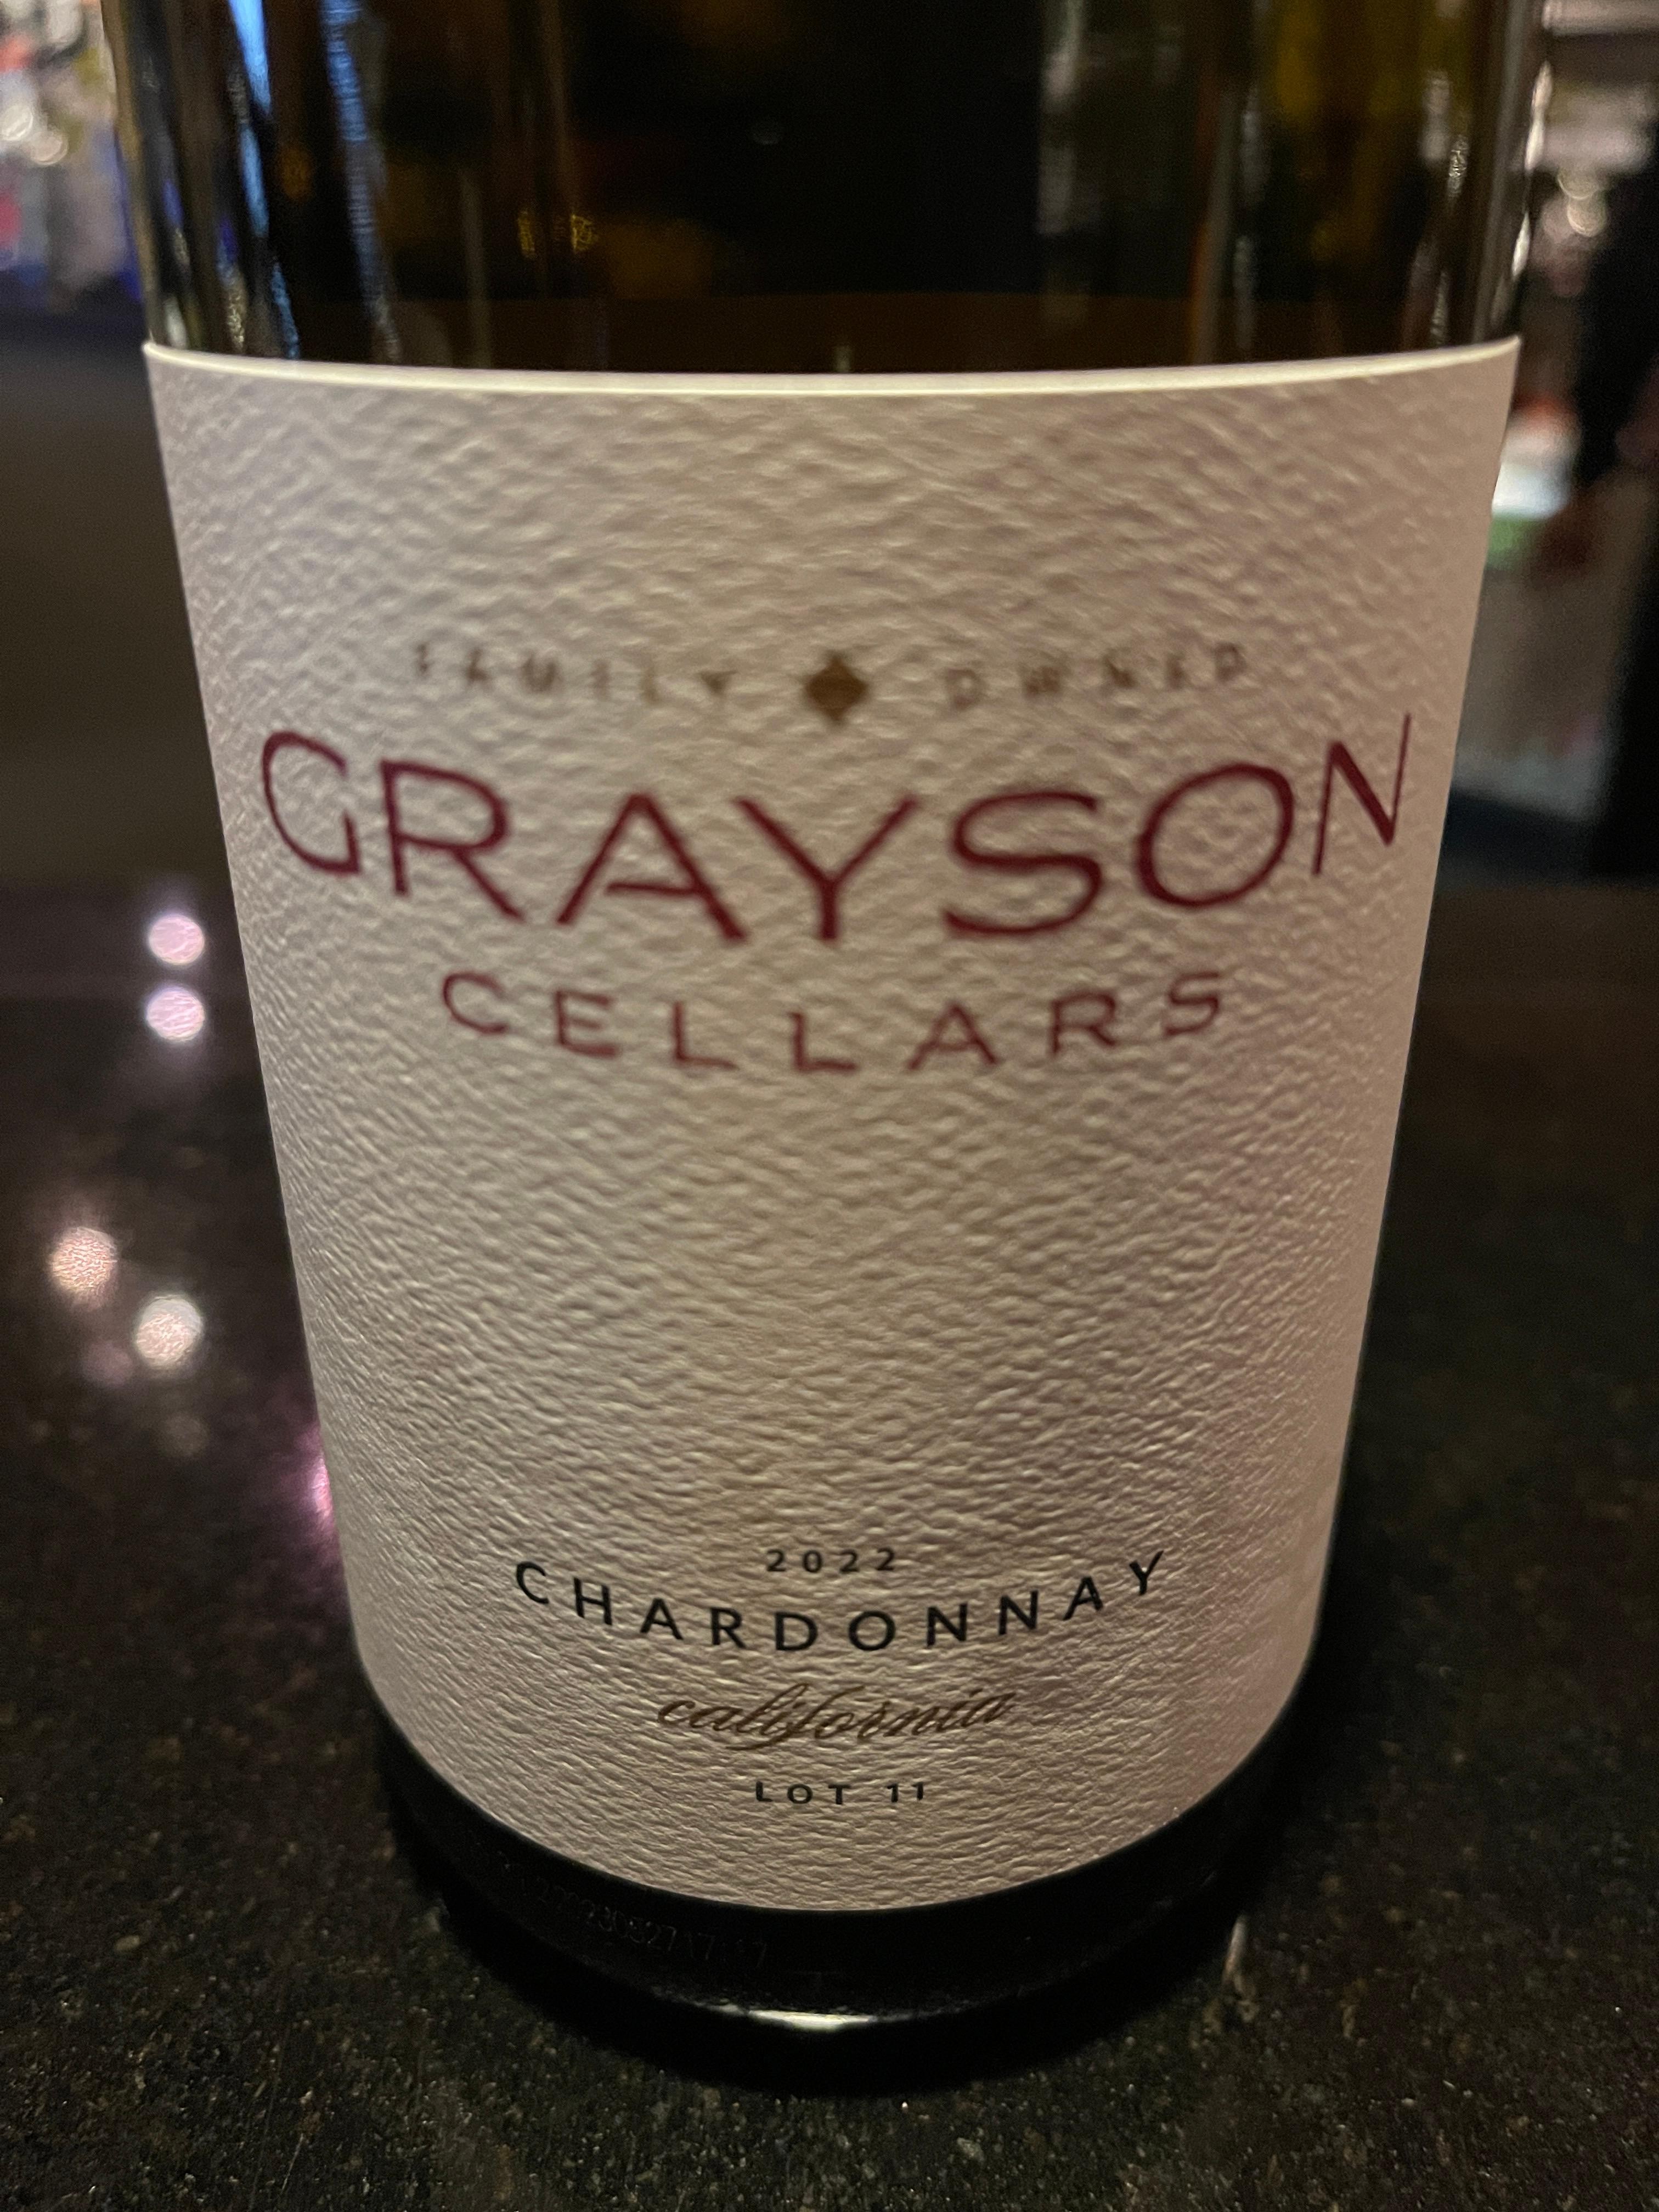 ***Grayson Chardonnay, 2022, California